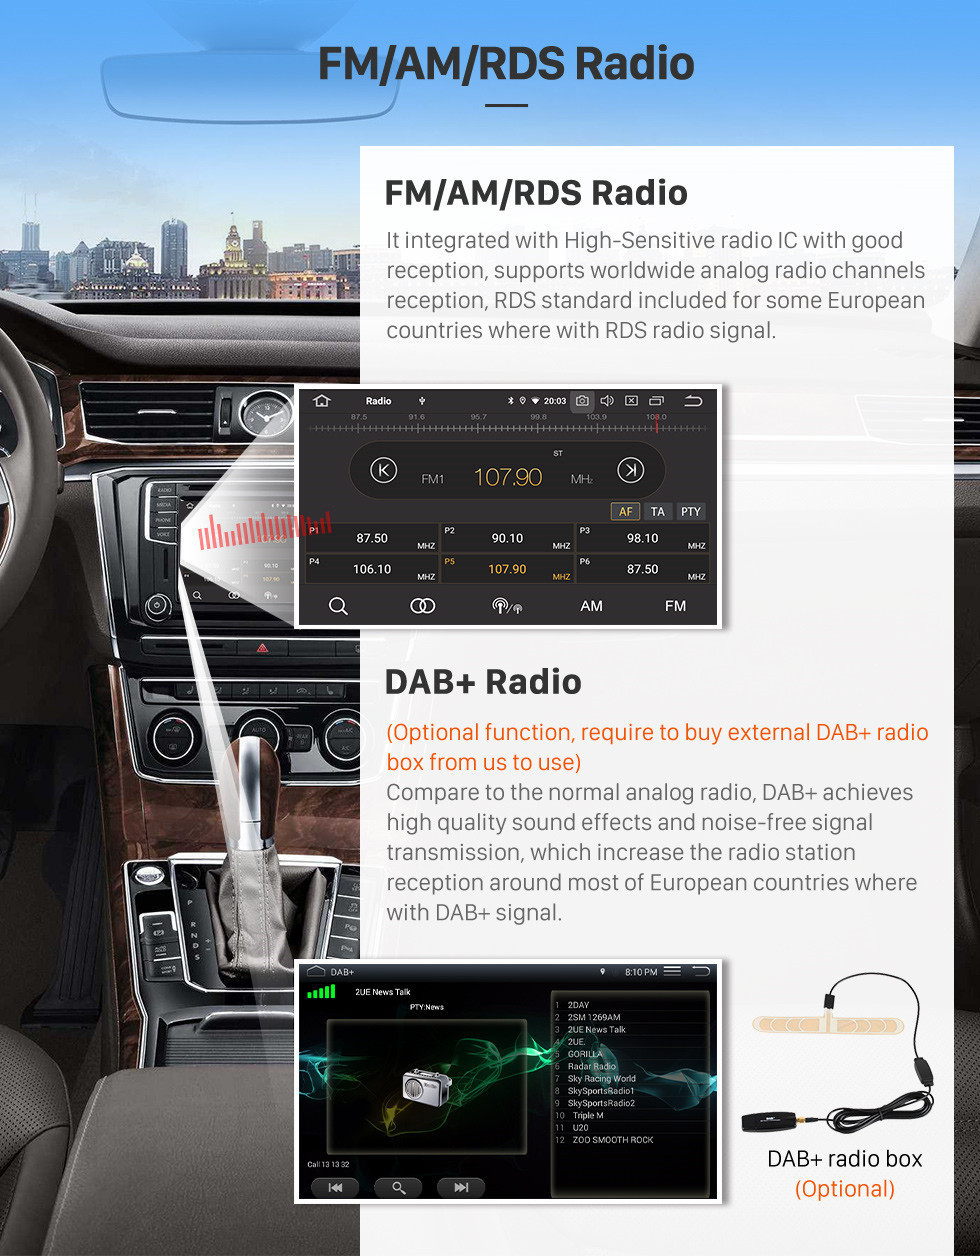 Seicane HD сенсорный экран Hyundai ix35 Android 11.0 11.0 9-дюймовый GPS-навигация Радио Bluetooth Carplay AUX Поддержка музыки SWC OBD2 Mirror Link Резервная камера